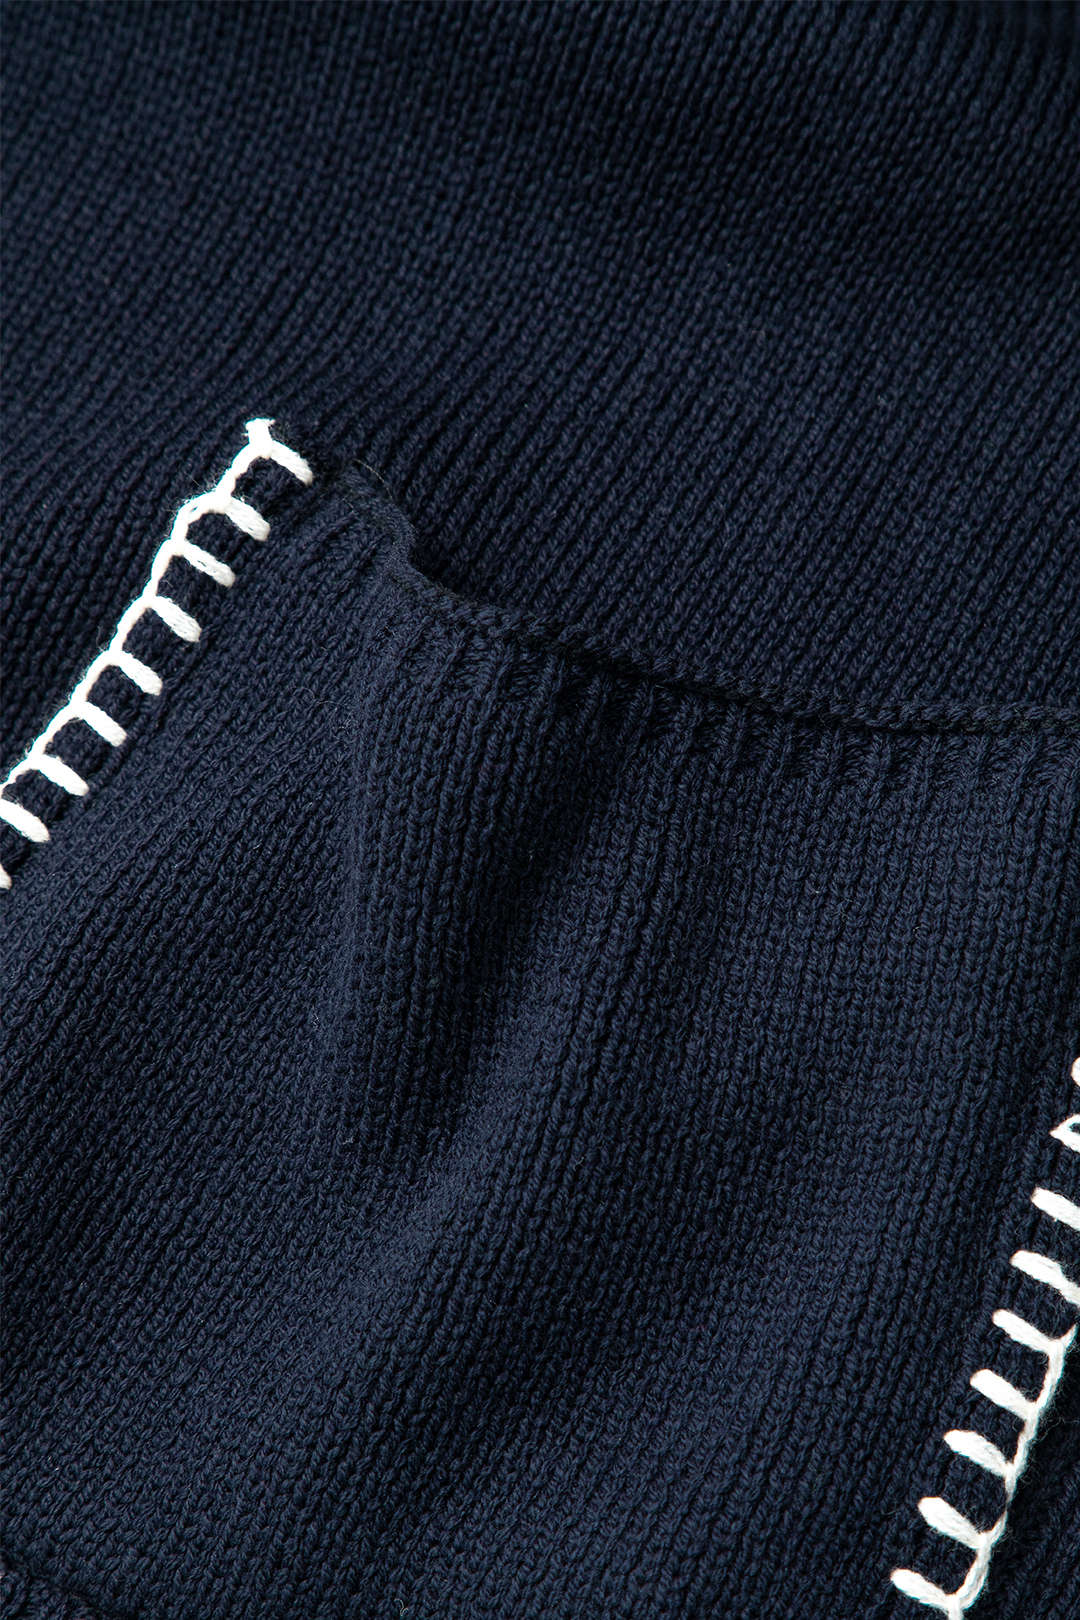 Contrast V-Neck Pocket Long Sleeve Knit Top